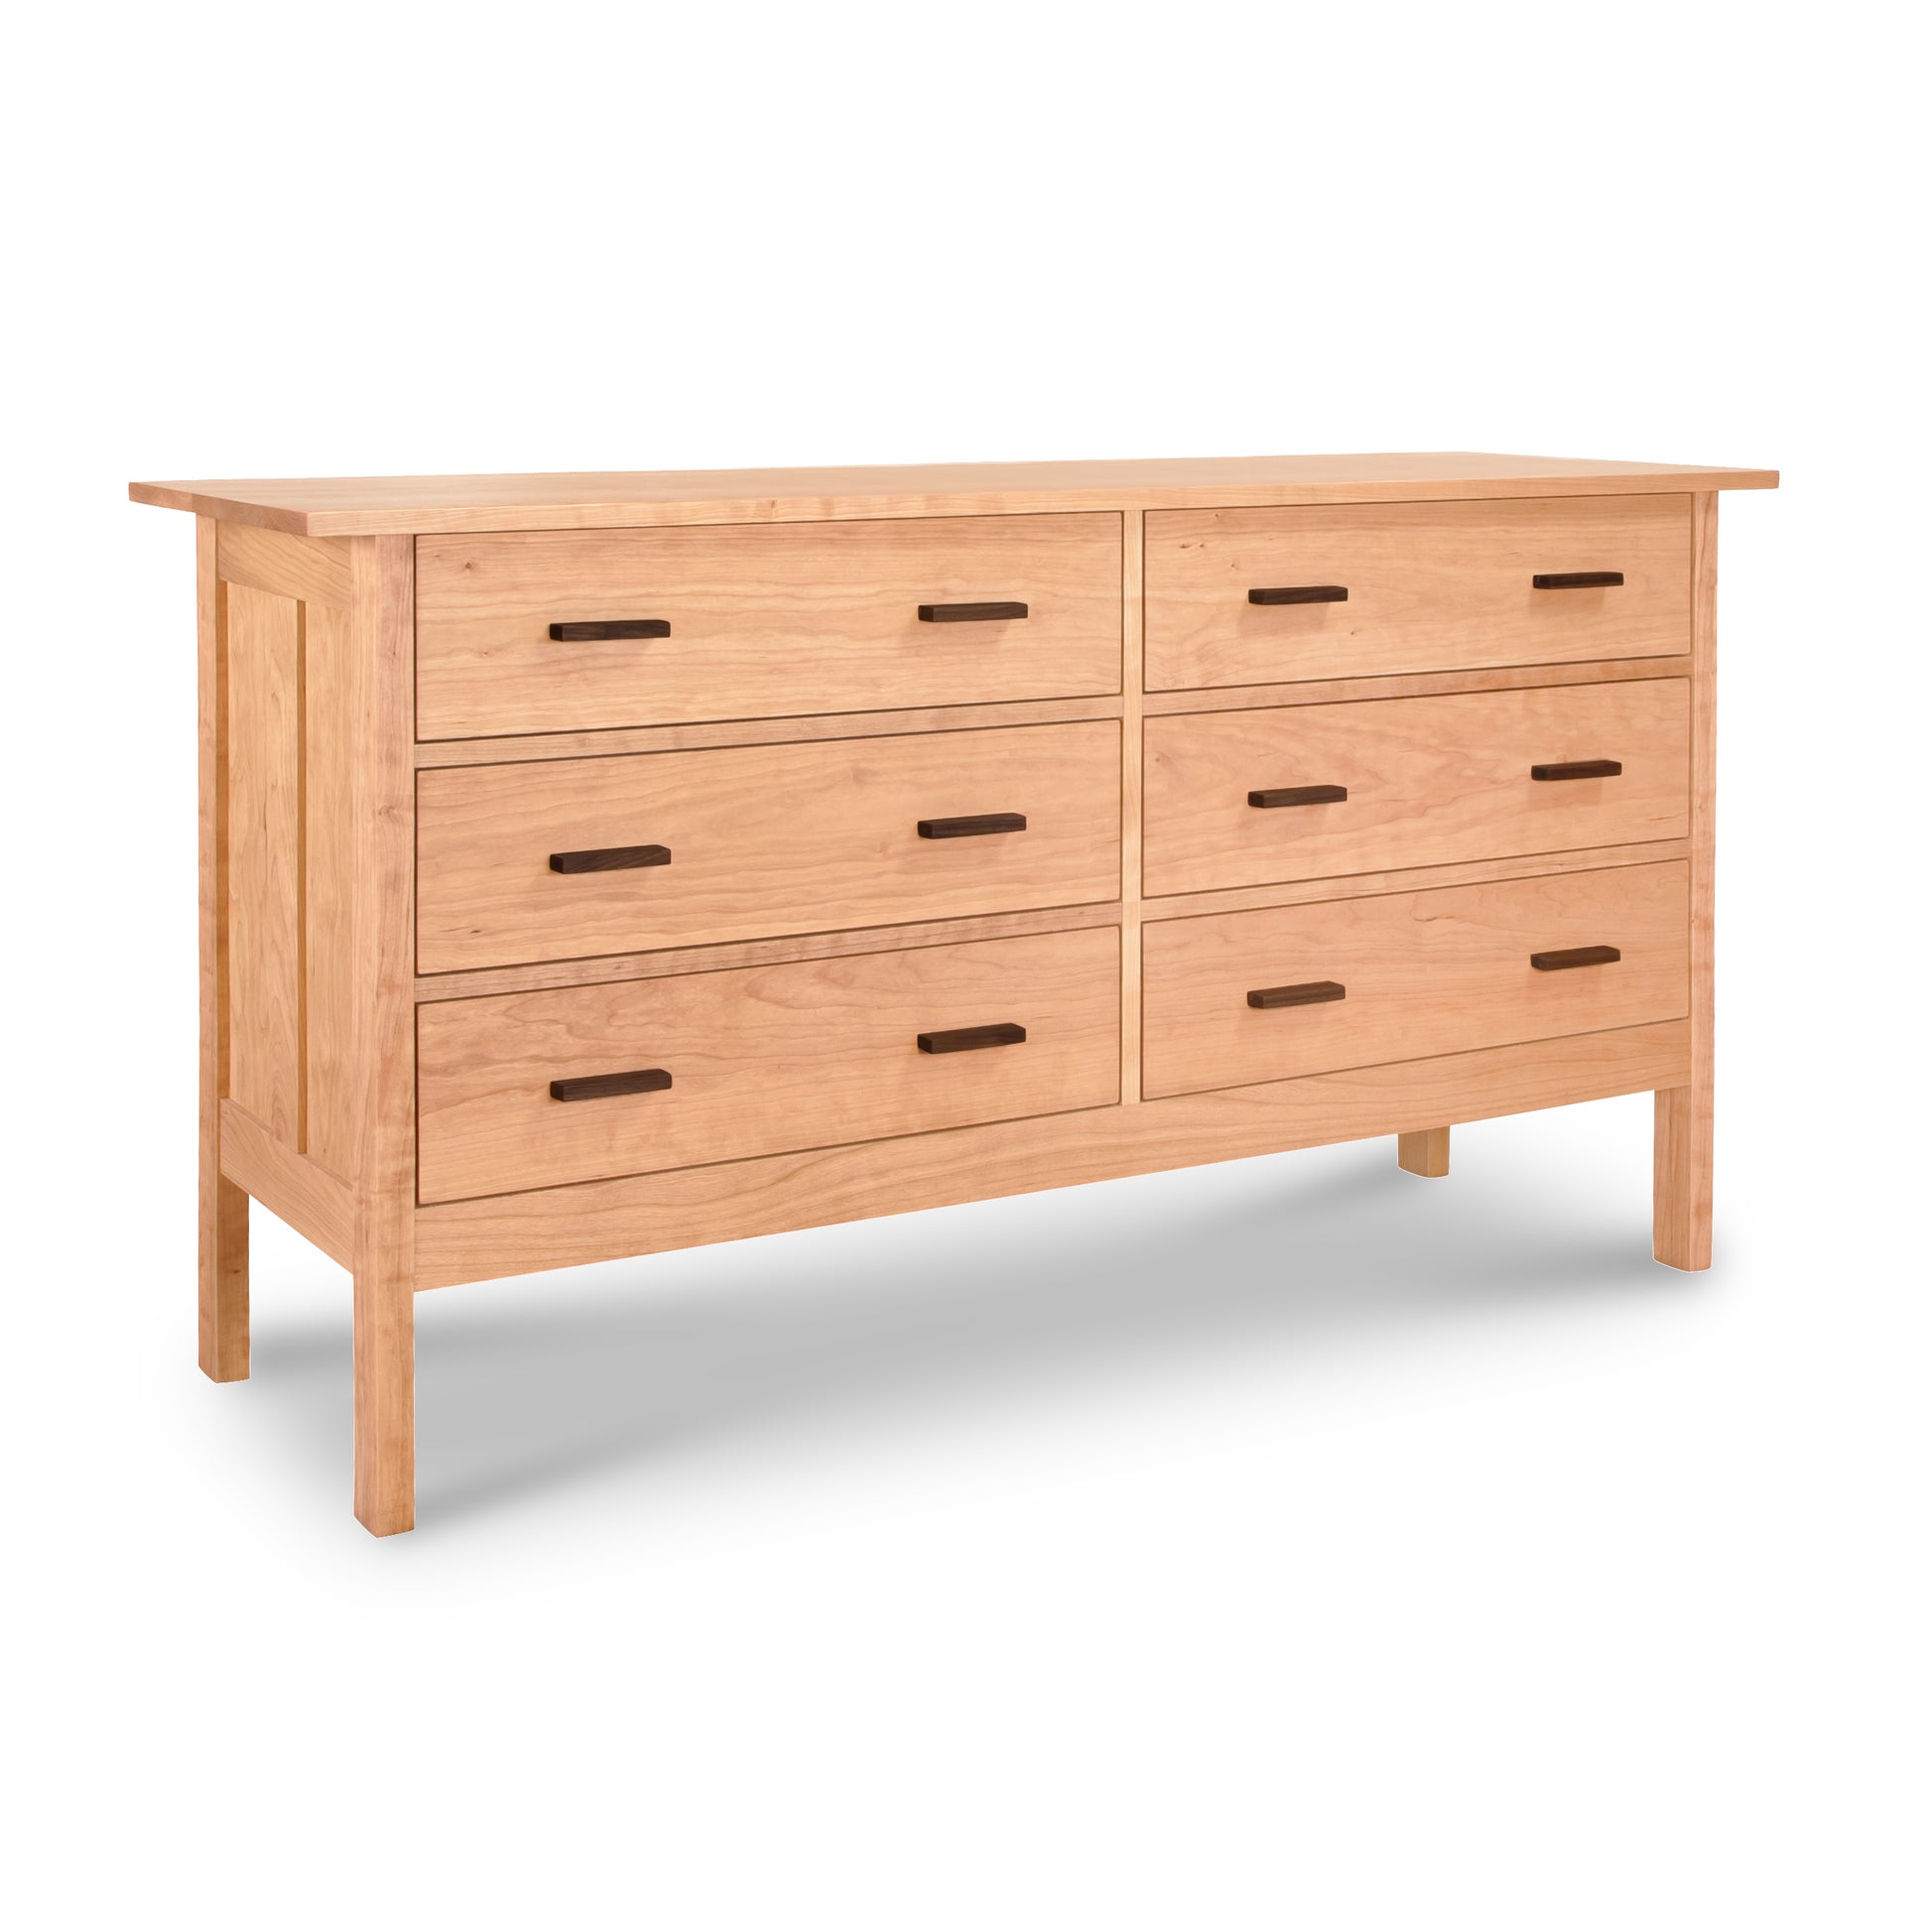 A Vermont Furniture Designs Modern Craftsman 6-Drawer Dresser isolated on a white background.